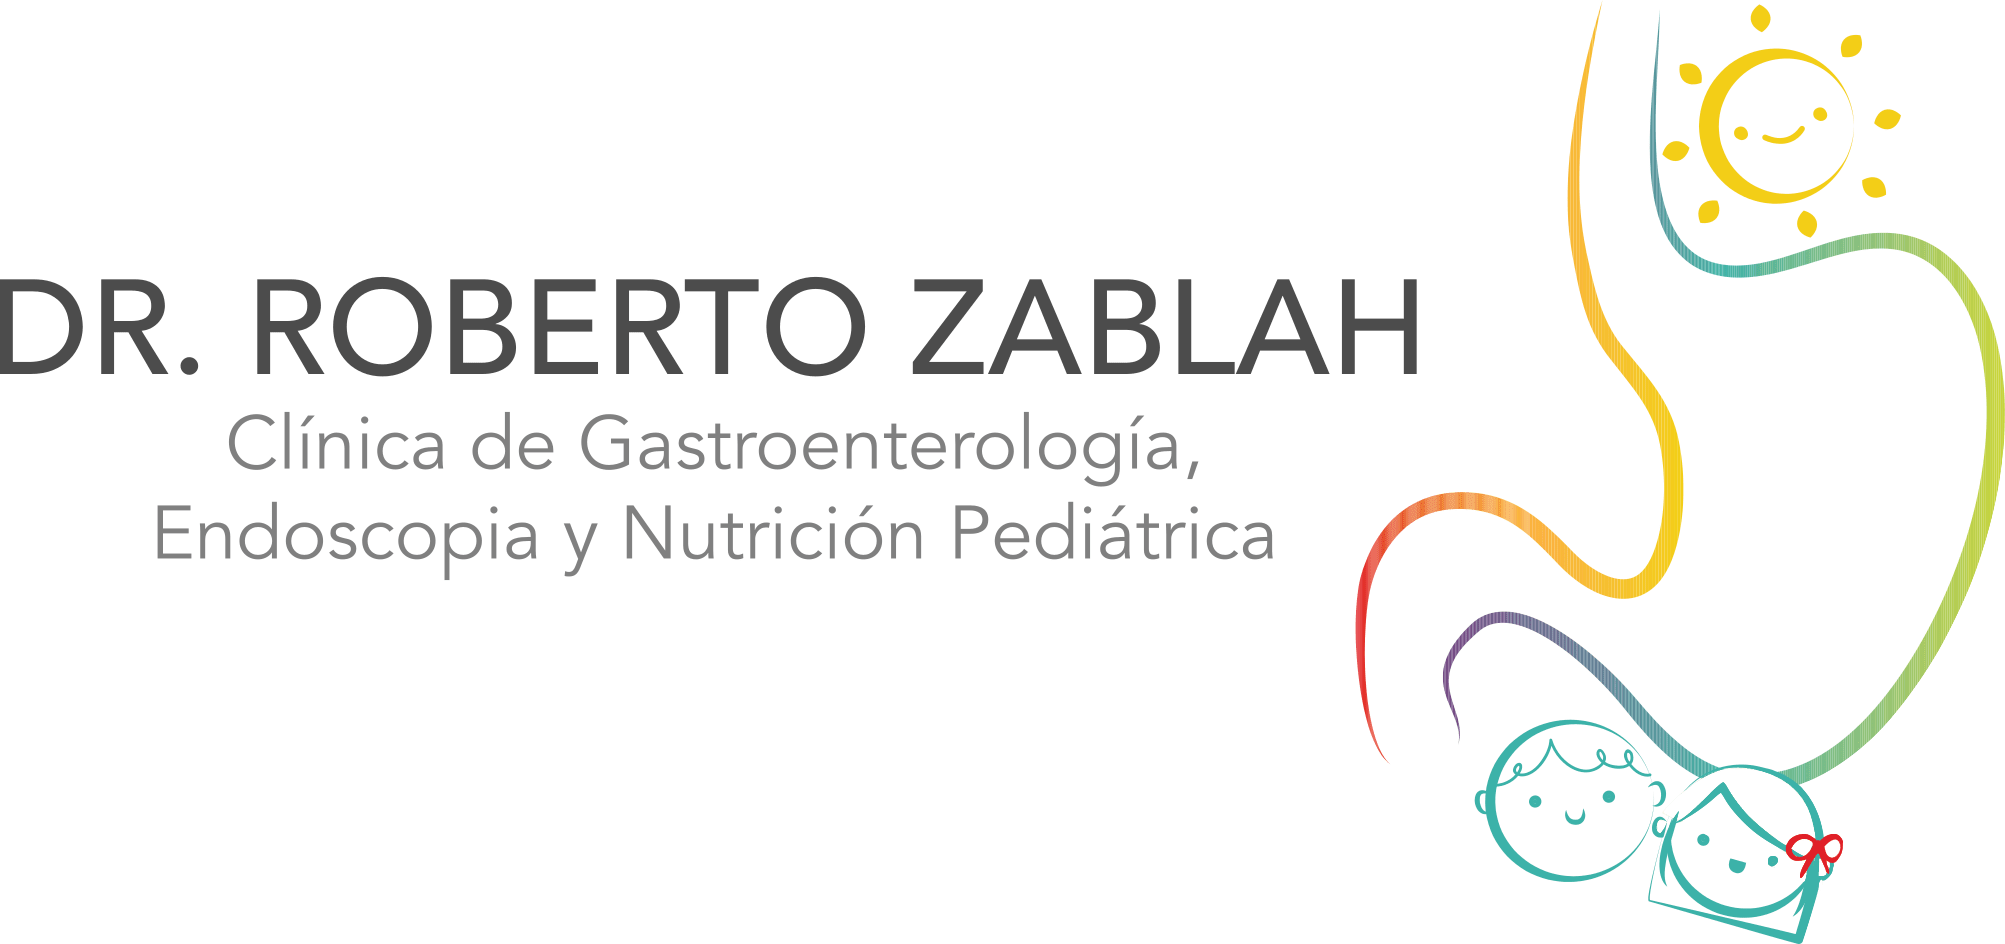 Dr. Roberto Zablah Gastroenterólogo Pediatra